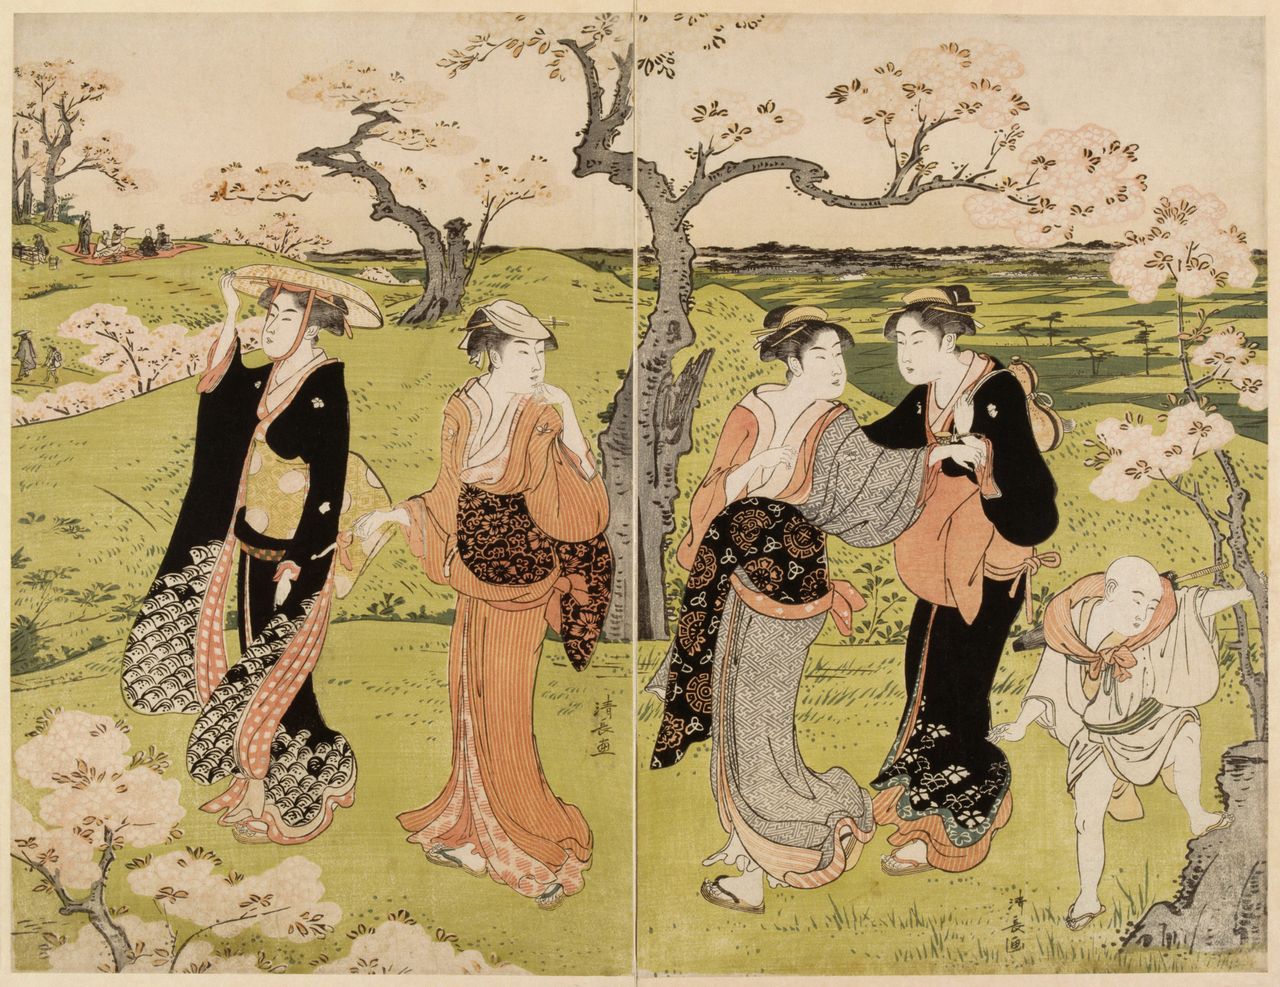 Torii Kiyonaga, "Picnic under the cherry blossoms in Asukayama," 1787